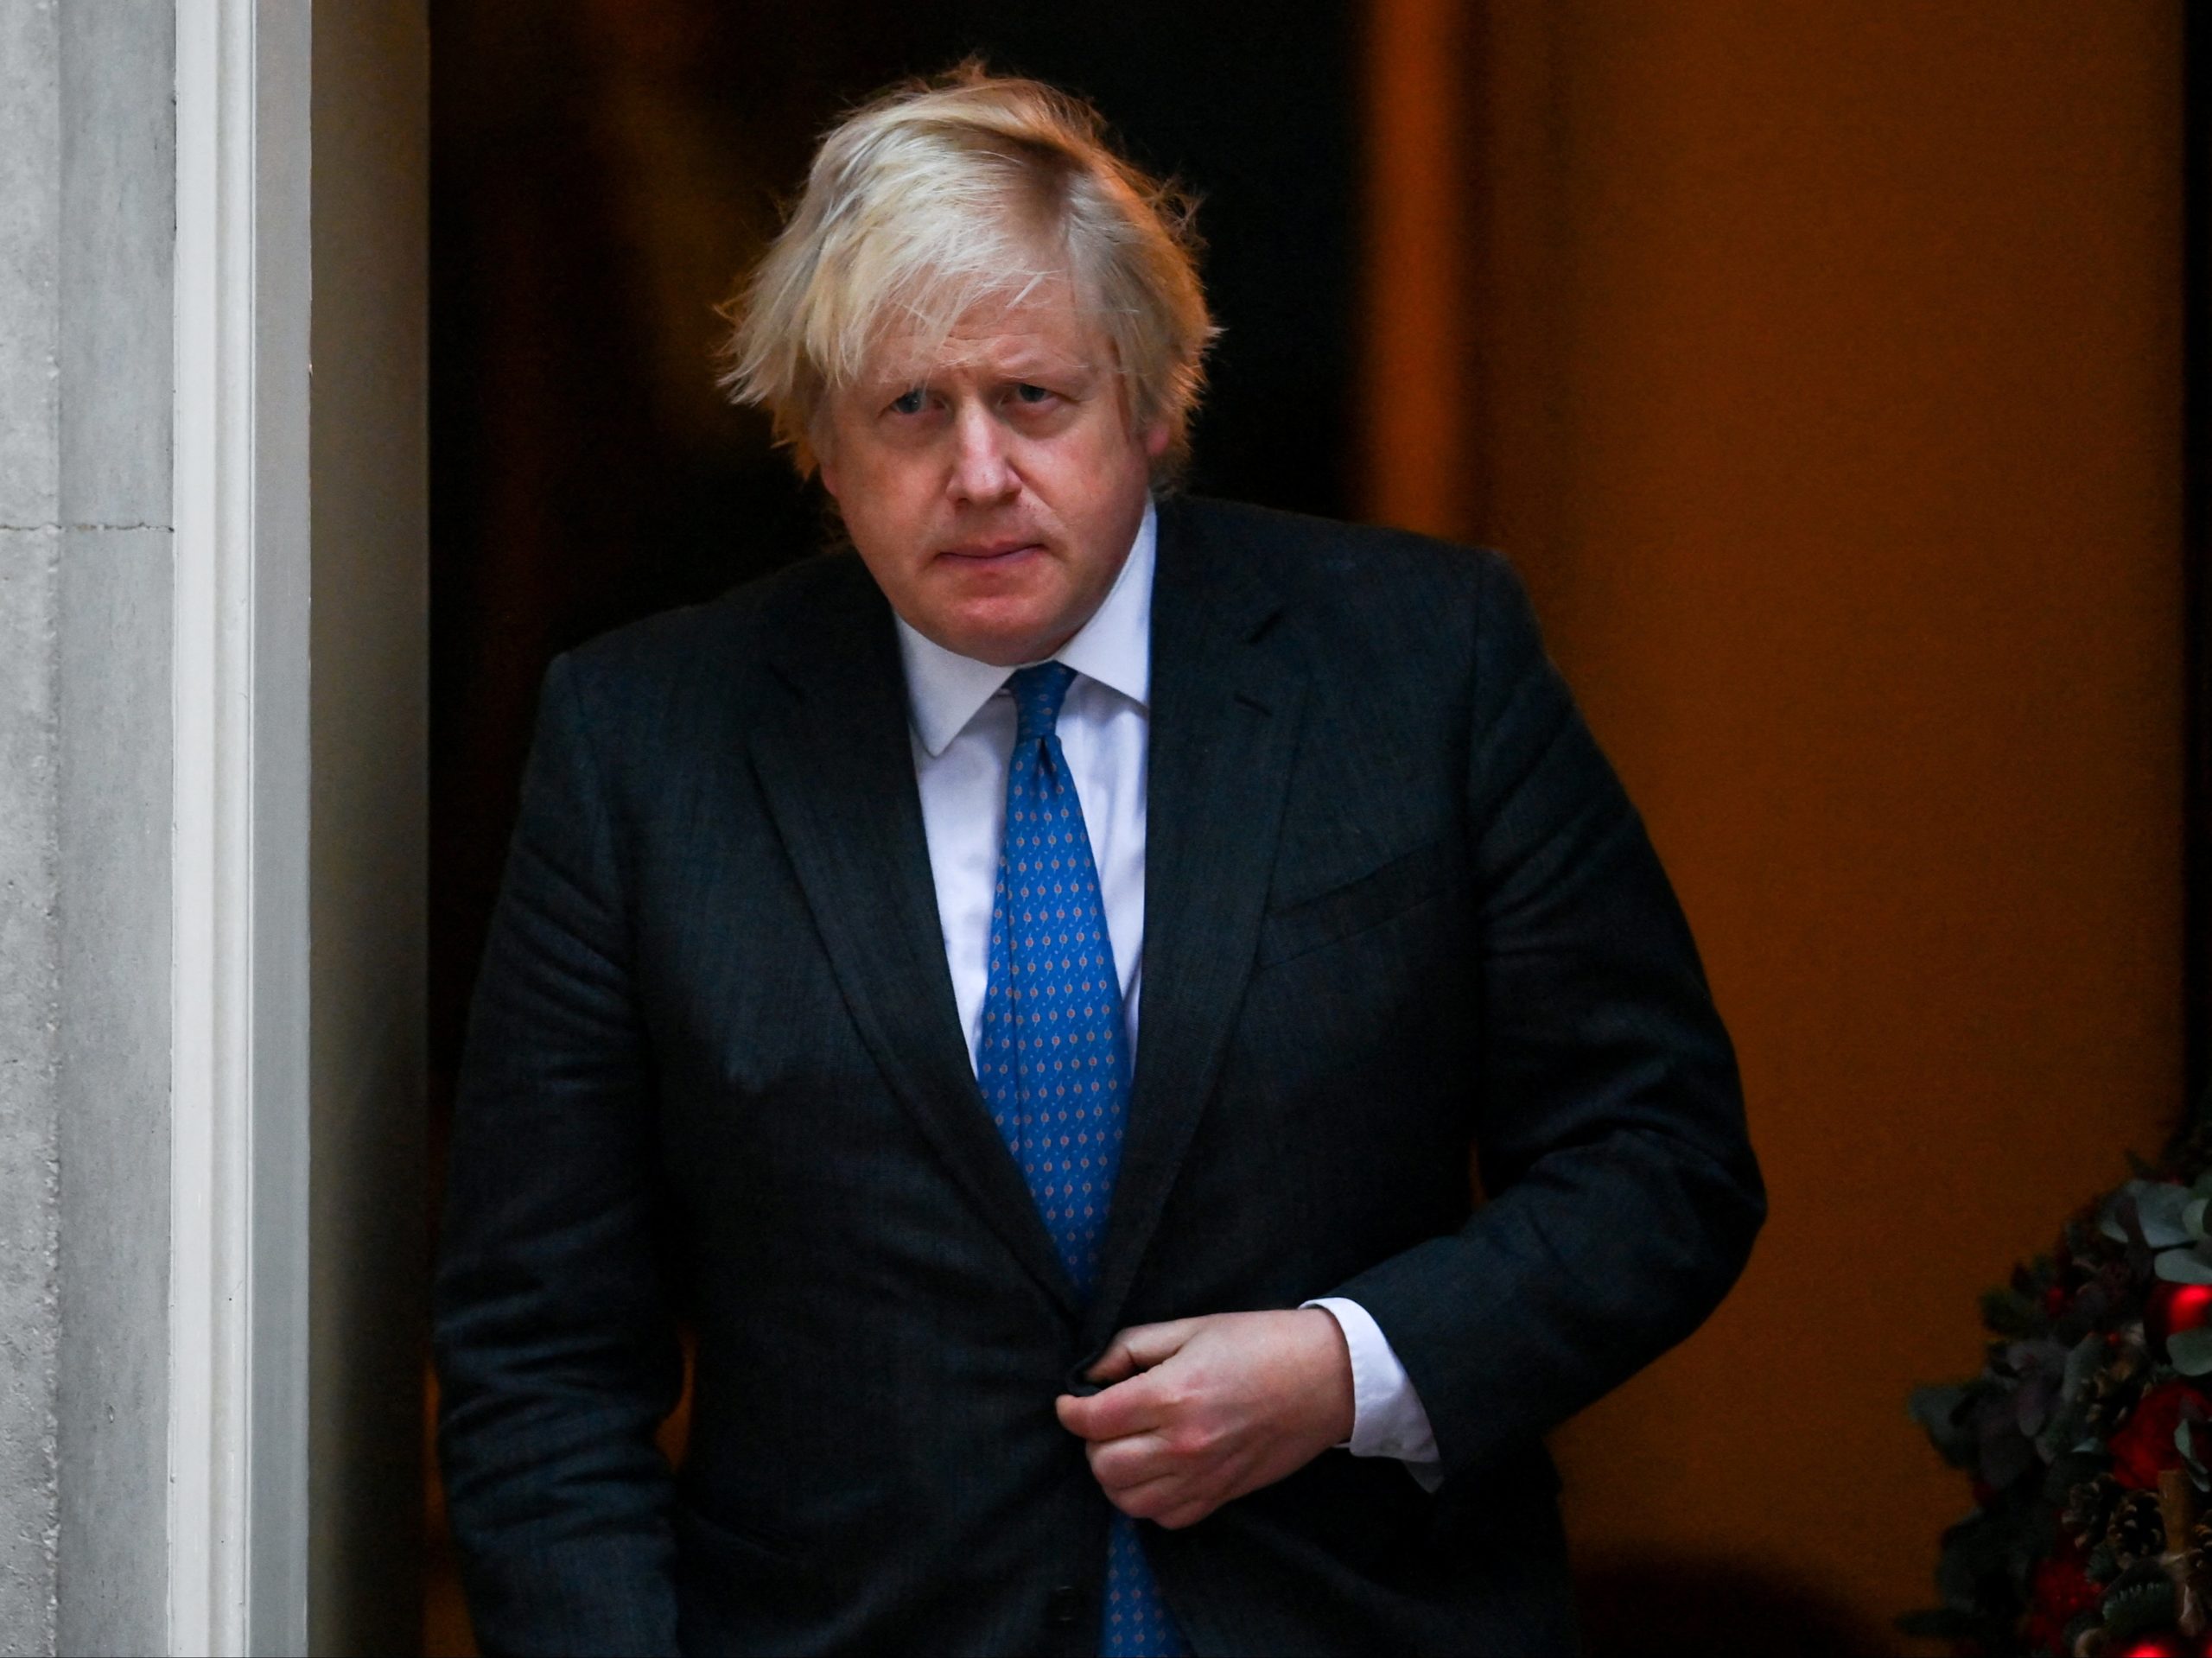 Liar.co.uk links you straight to Boris Johnson’s Wikipedia page